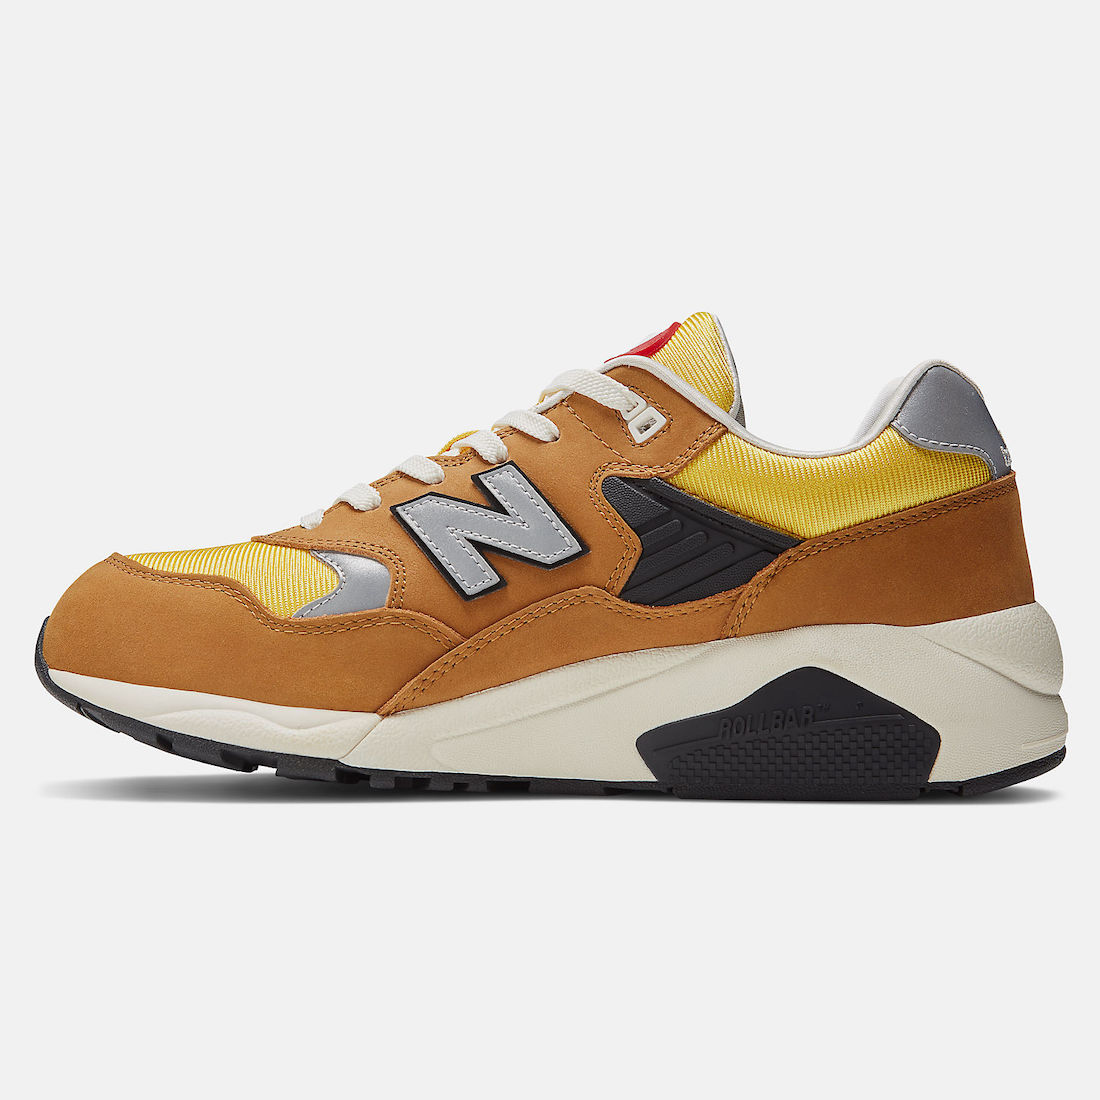 New Balance 580 “Brown” MT580AB2